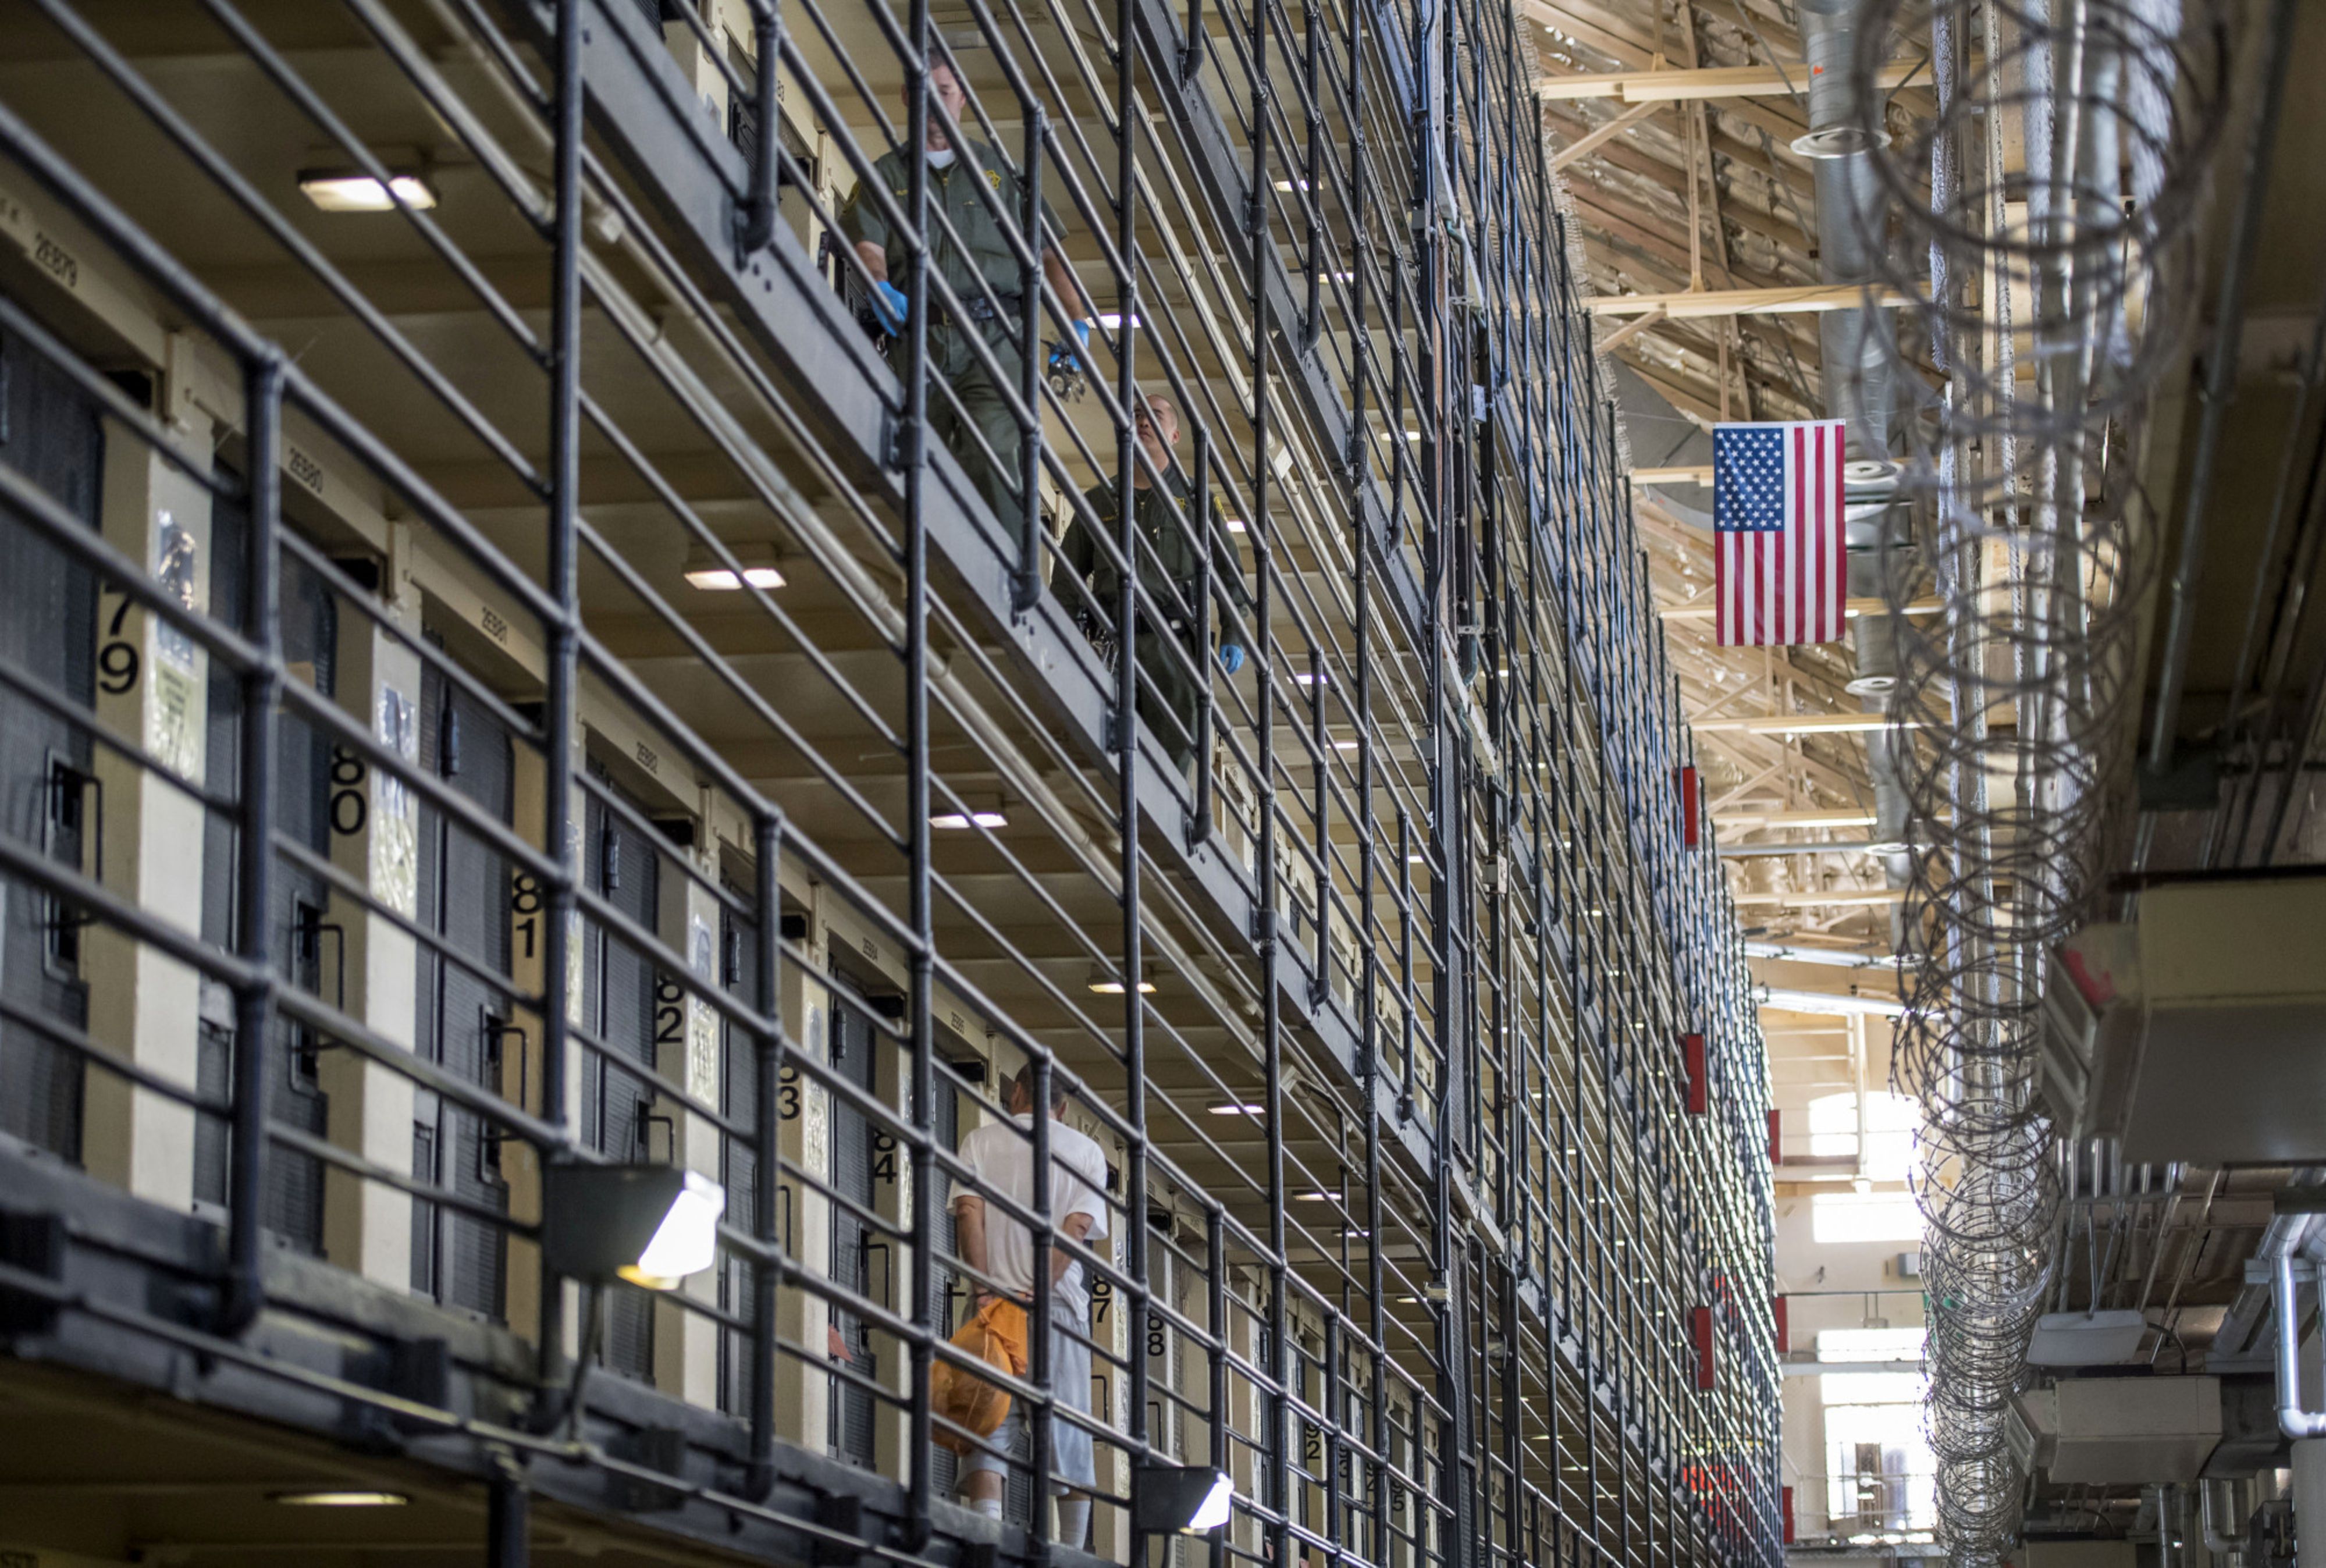 Prison Escape Lockdown Cell Blocks Level 2 Full Walkthrough with